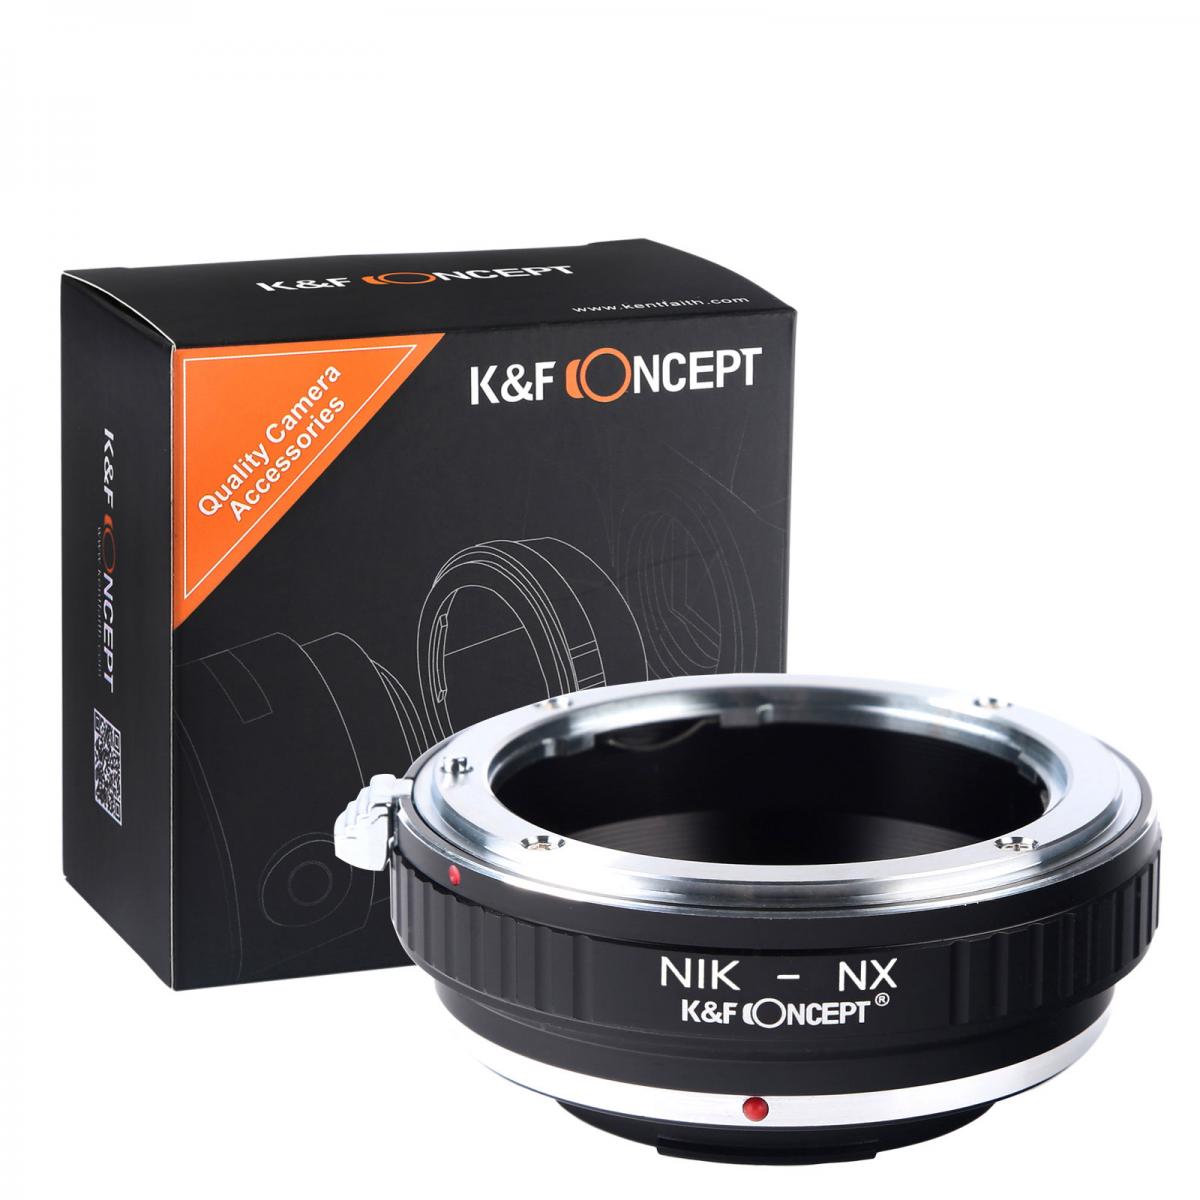 Nikon F Lenses to Samsung NX Lens Mount Adapter K&F Concept M11251 Lens Adapter